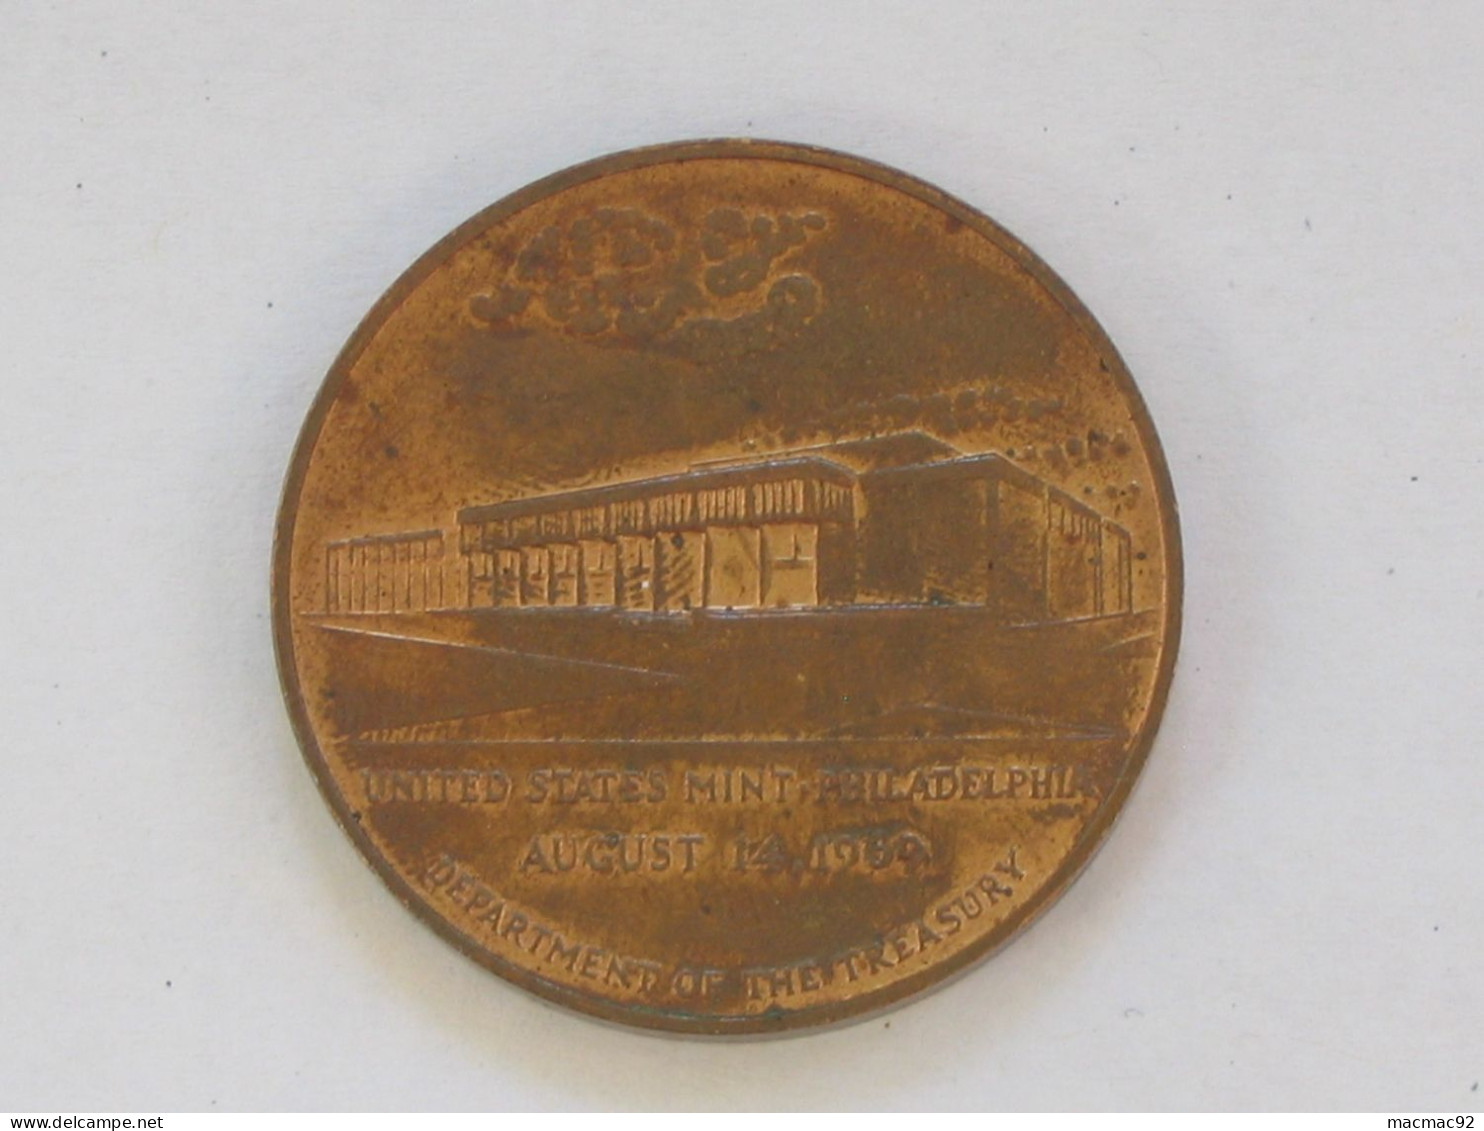 Médaille USA - UNITED STATES MINT - PHLILADELPHIA - August 14.1969  **** EN ACHAT IMMEDIAT **** - Firmen